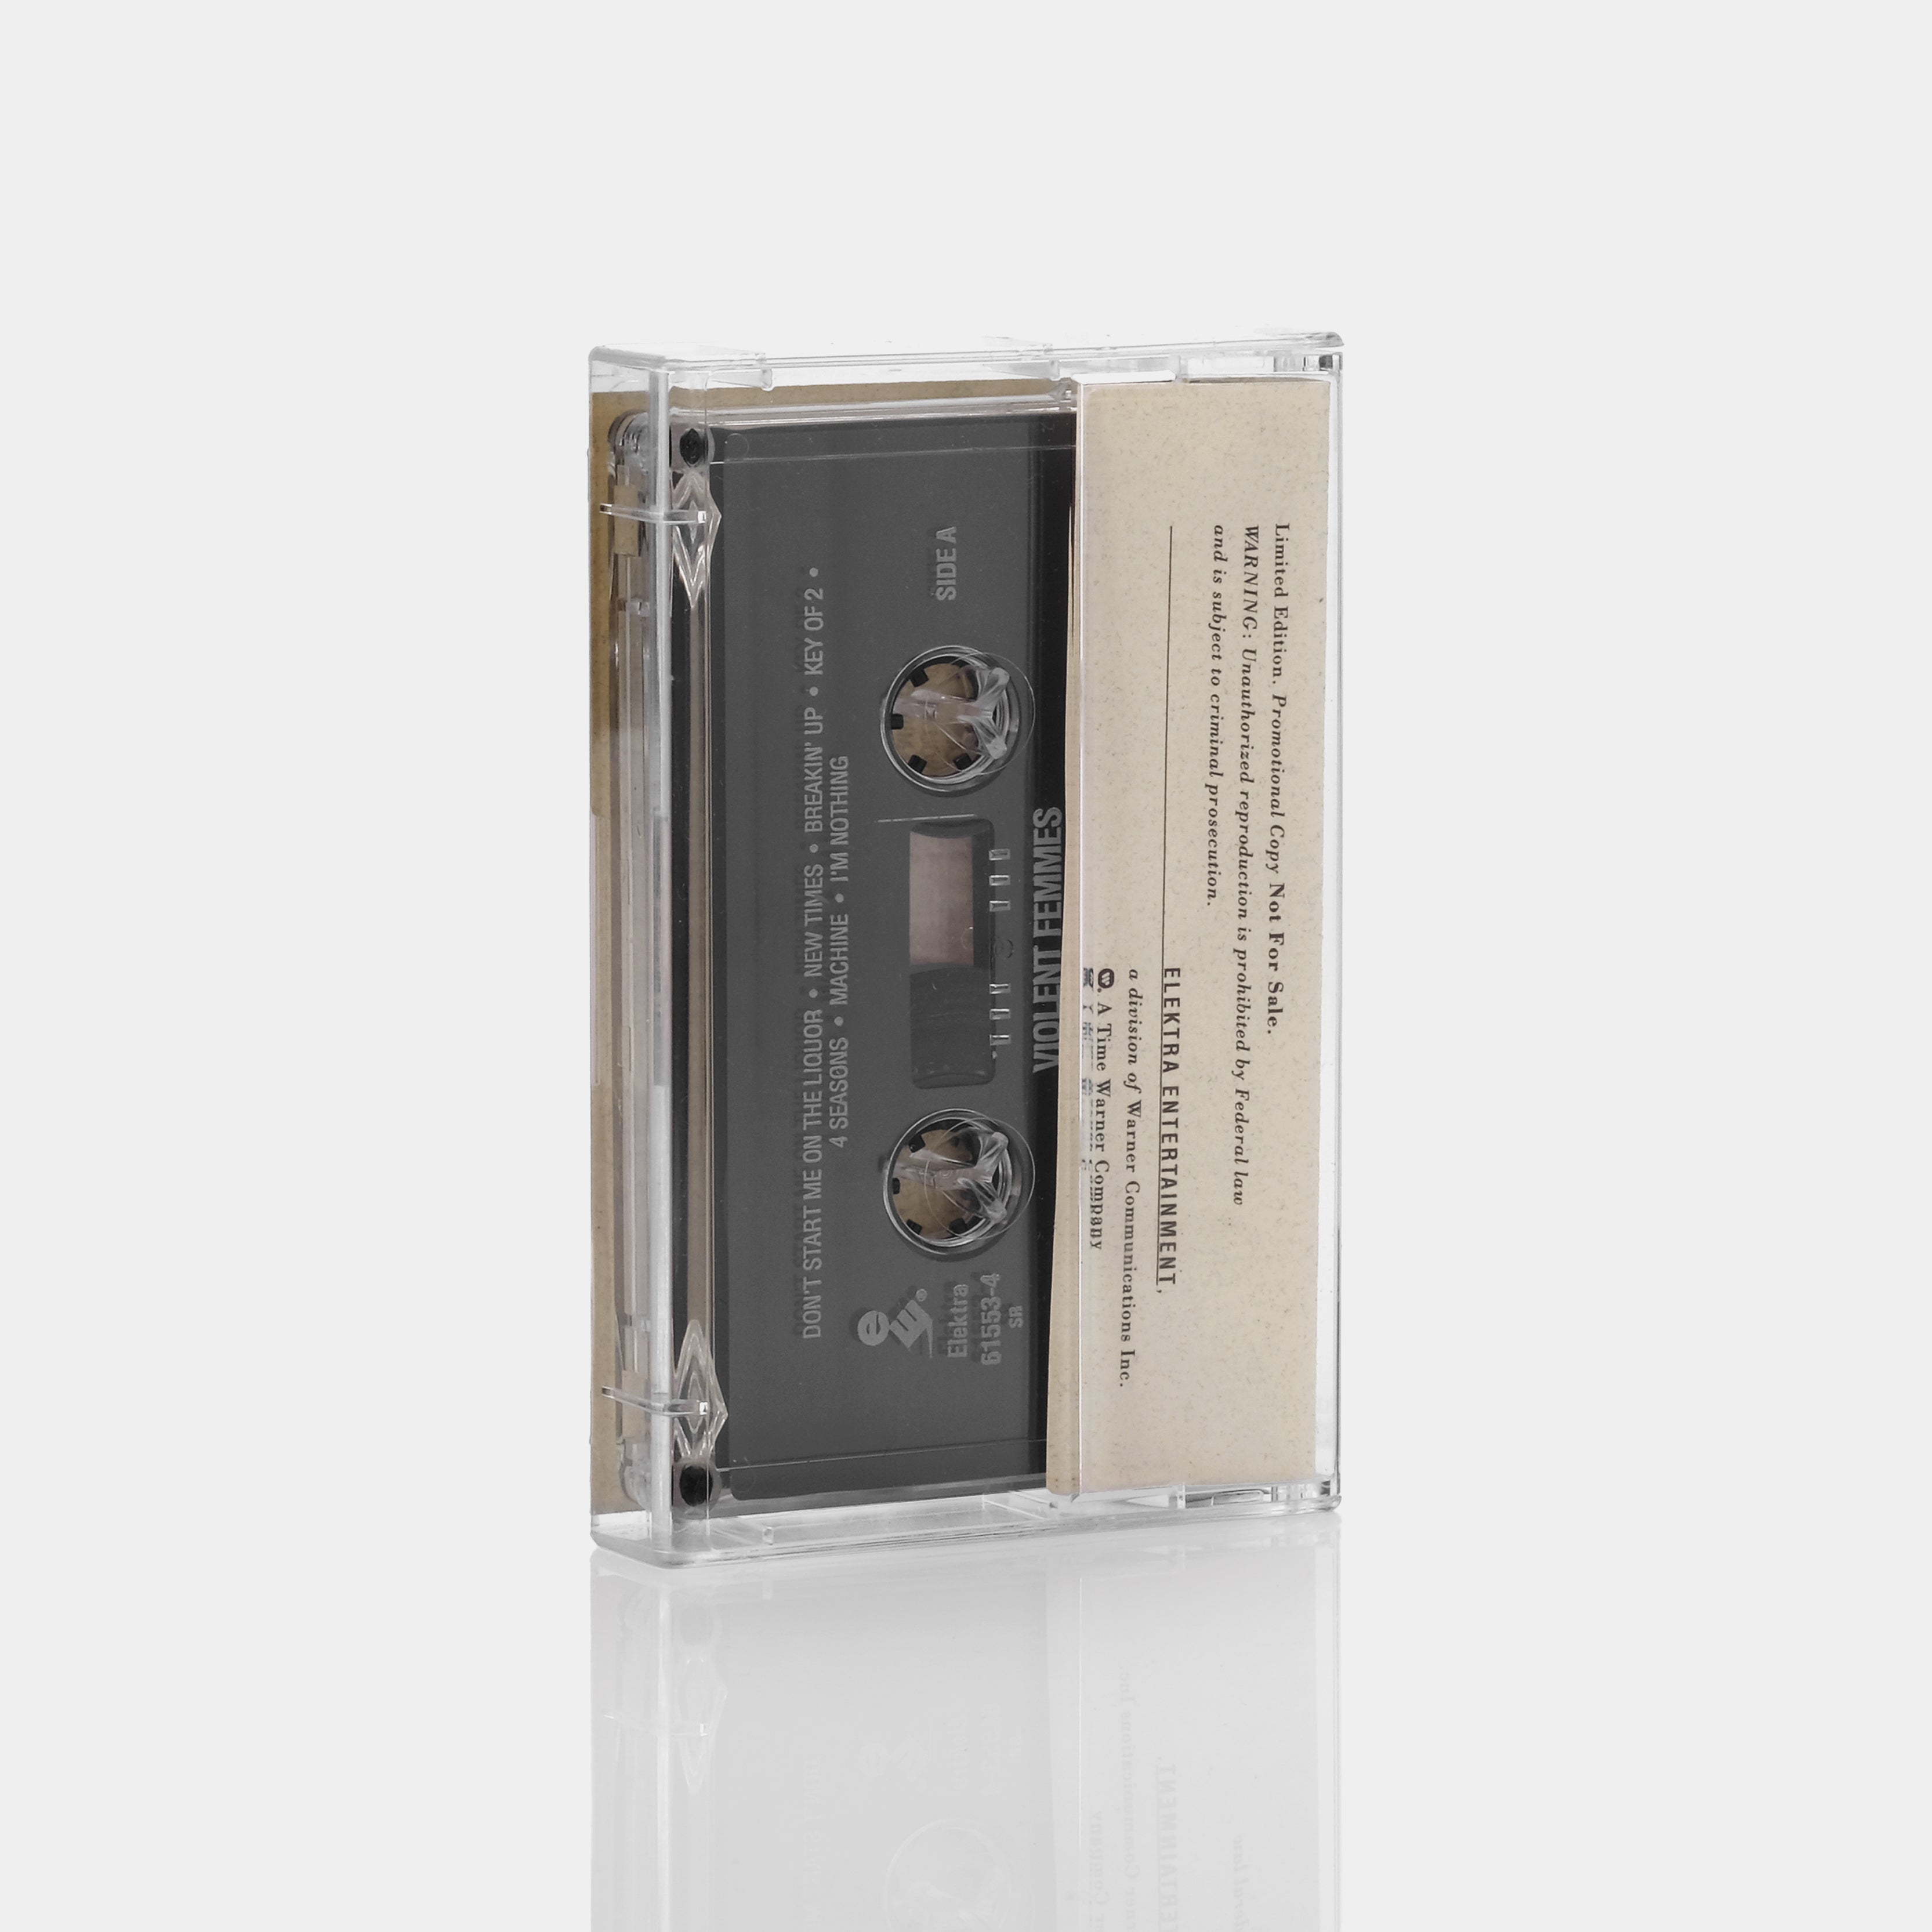 Violent Femmes - New Times (Limited Edition Promotional Copy) Cassette Tape